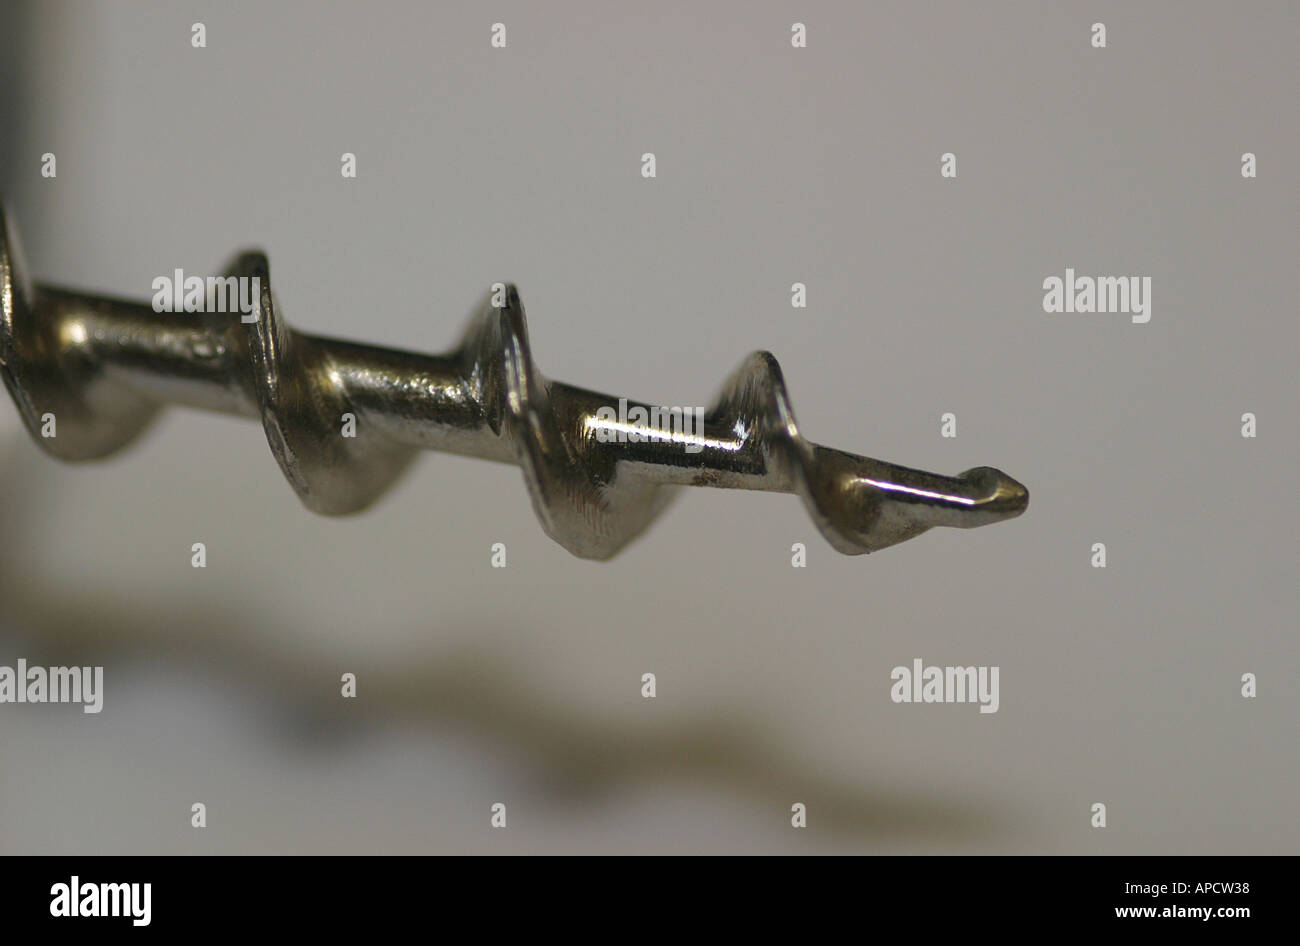 corkscrew on a bottle opener Stock Photo